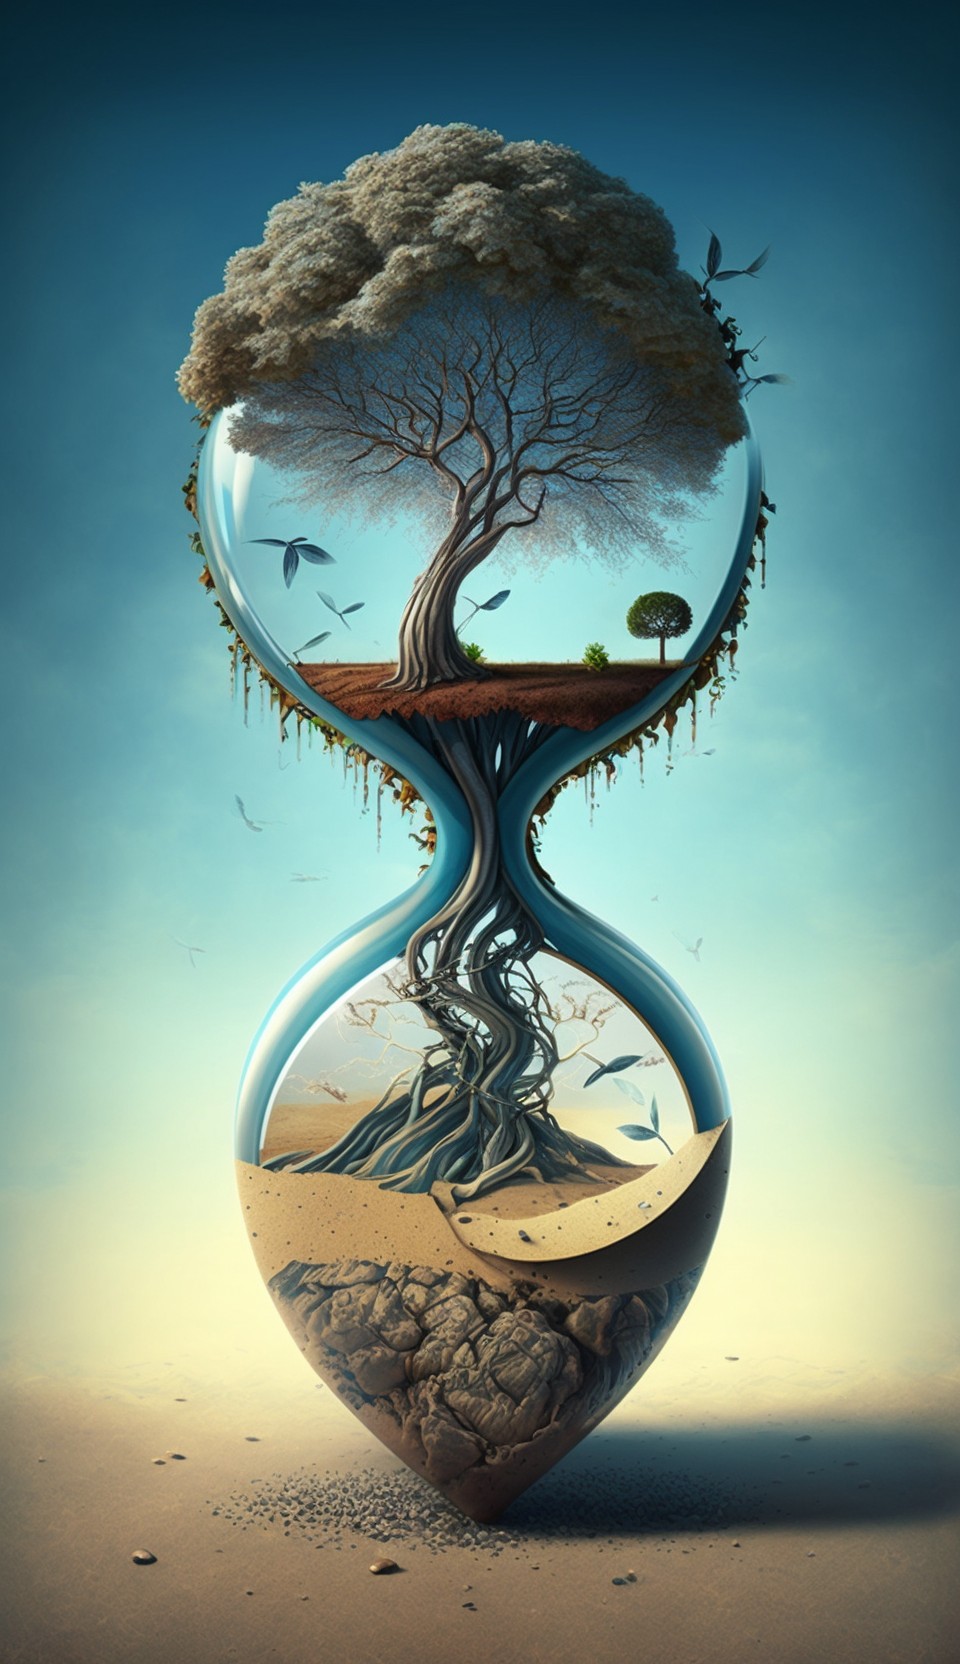 magic hourglass in time